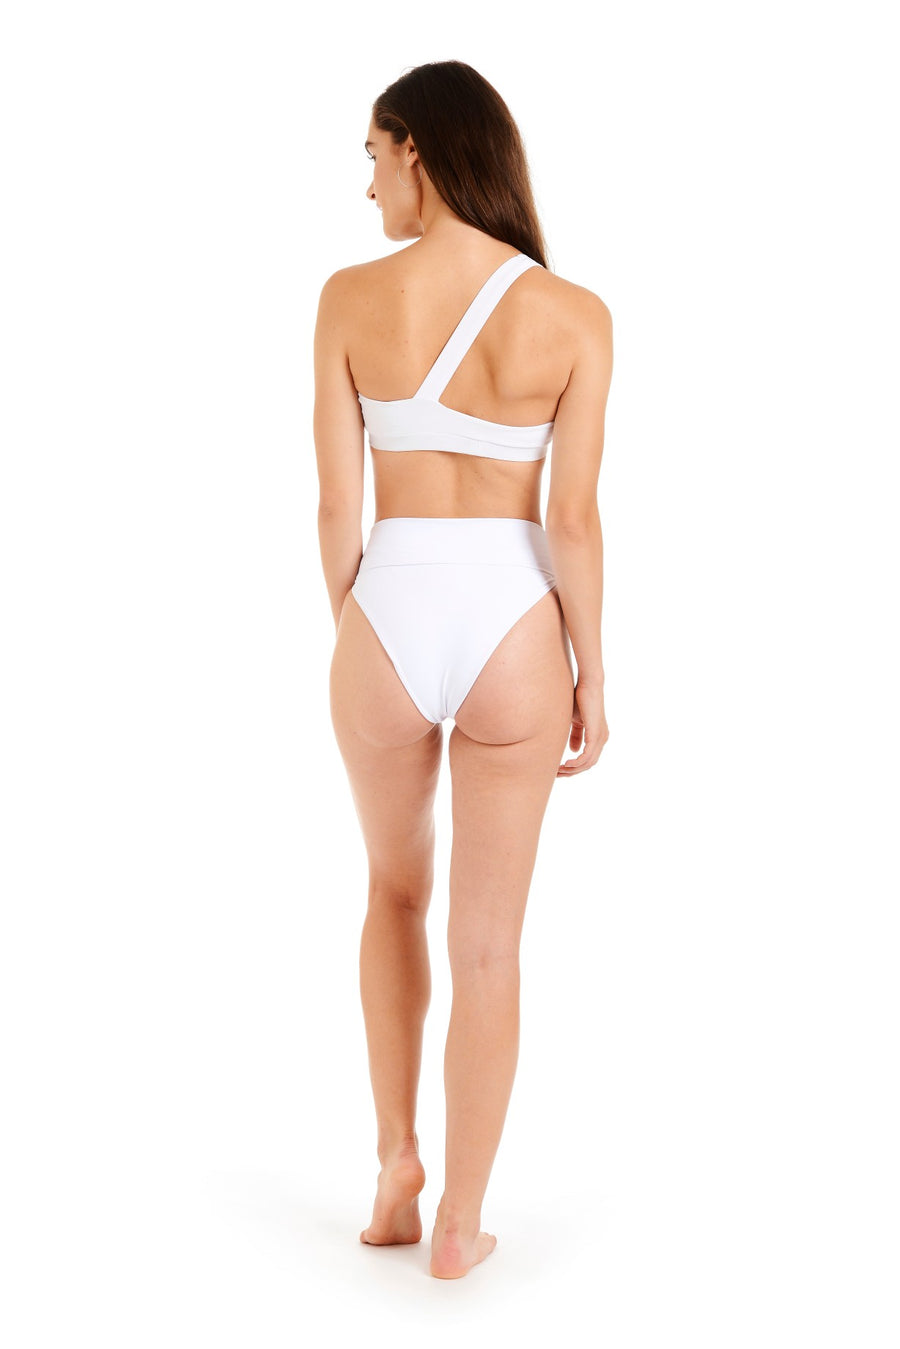 Back view of white bikini bottoms